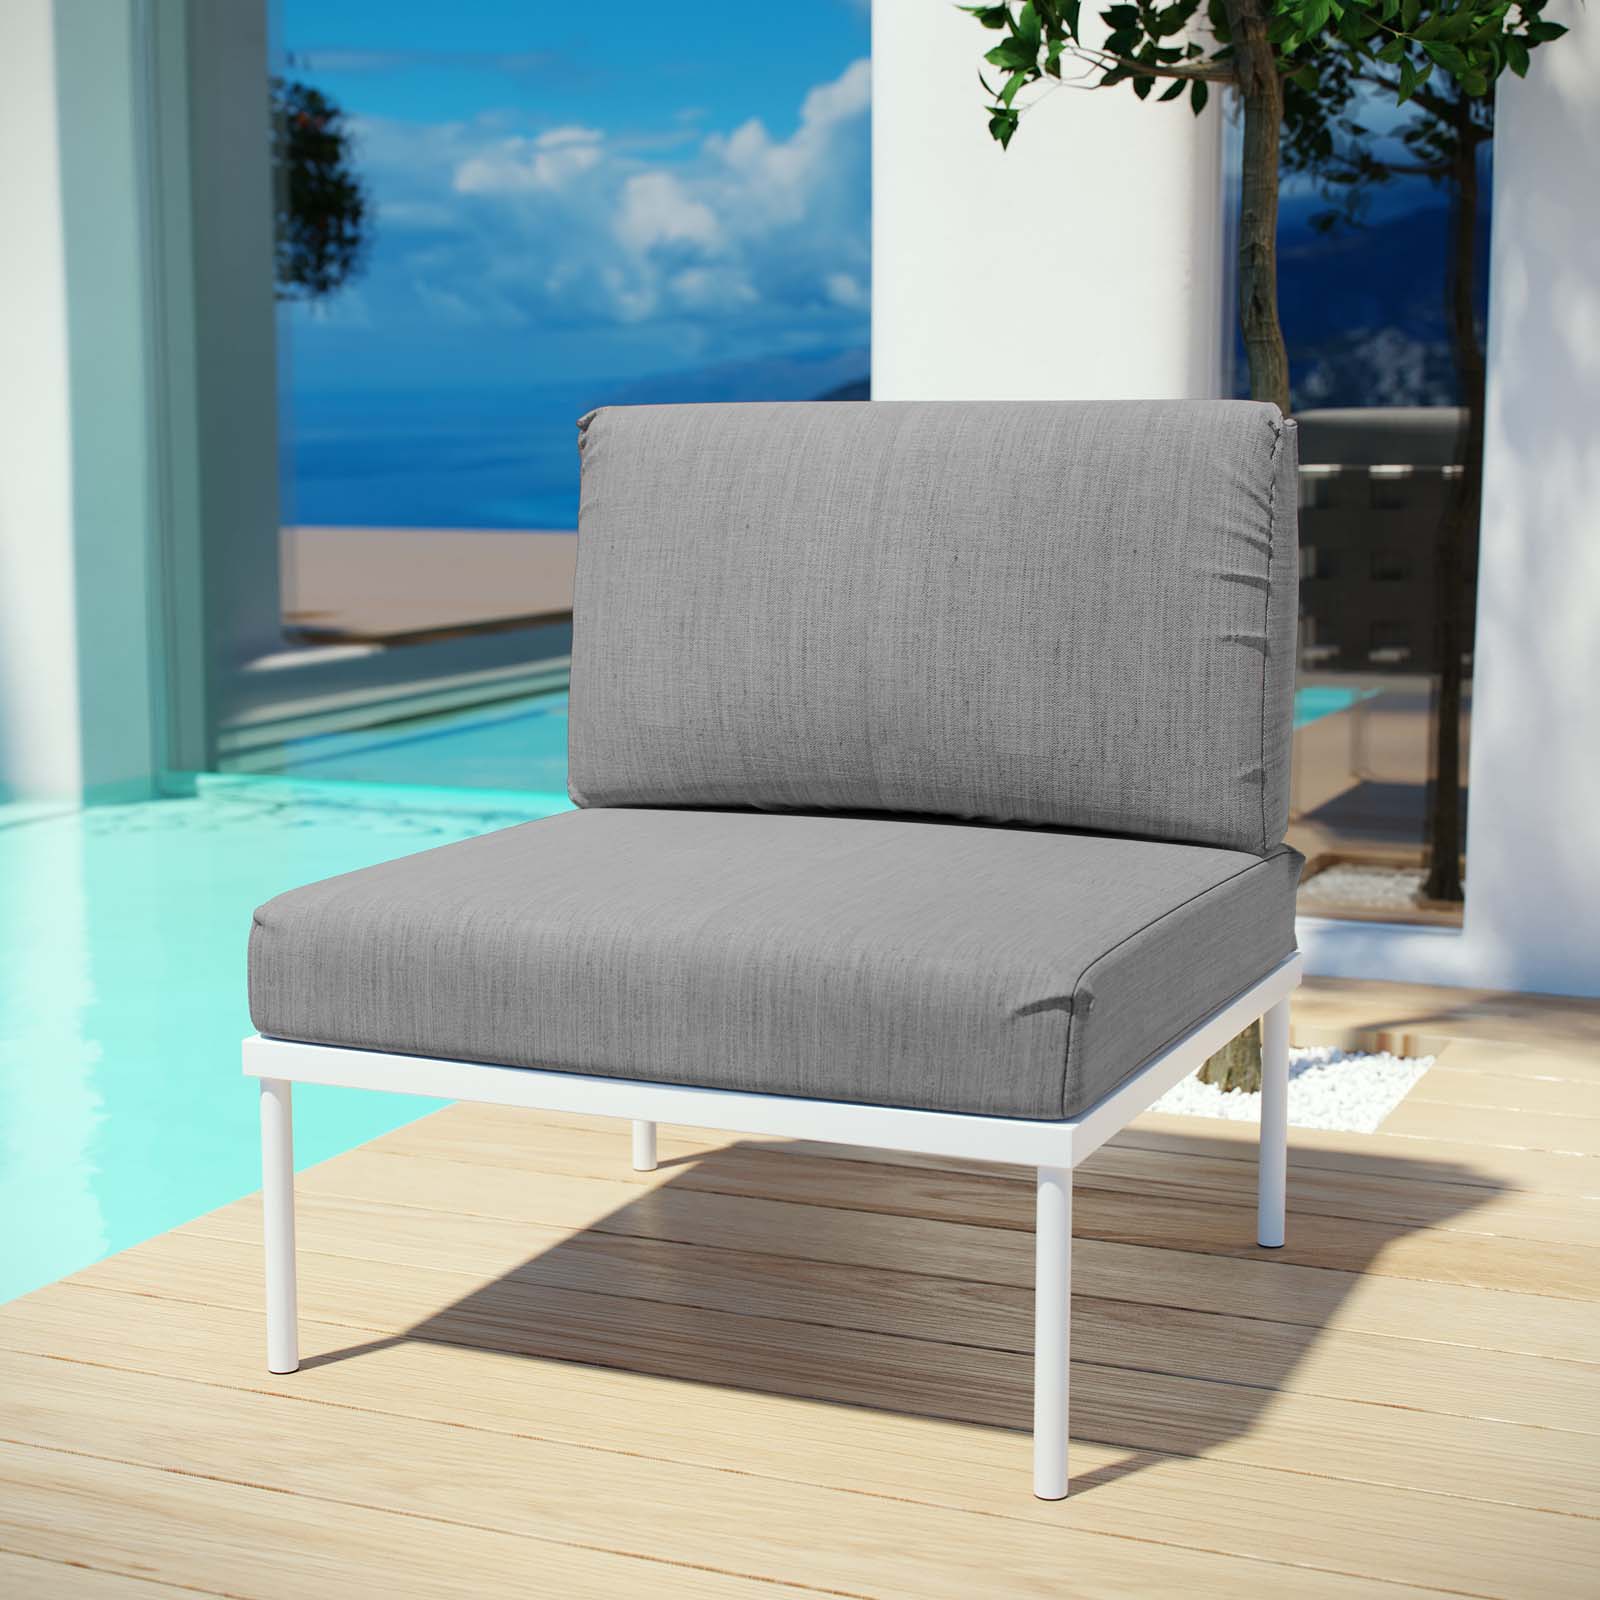 Modern Contemporary Urban Design Outdoor Patio Balcony Lounge Chair, Grey White Gray, Rattan - image 2 of 5